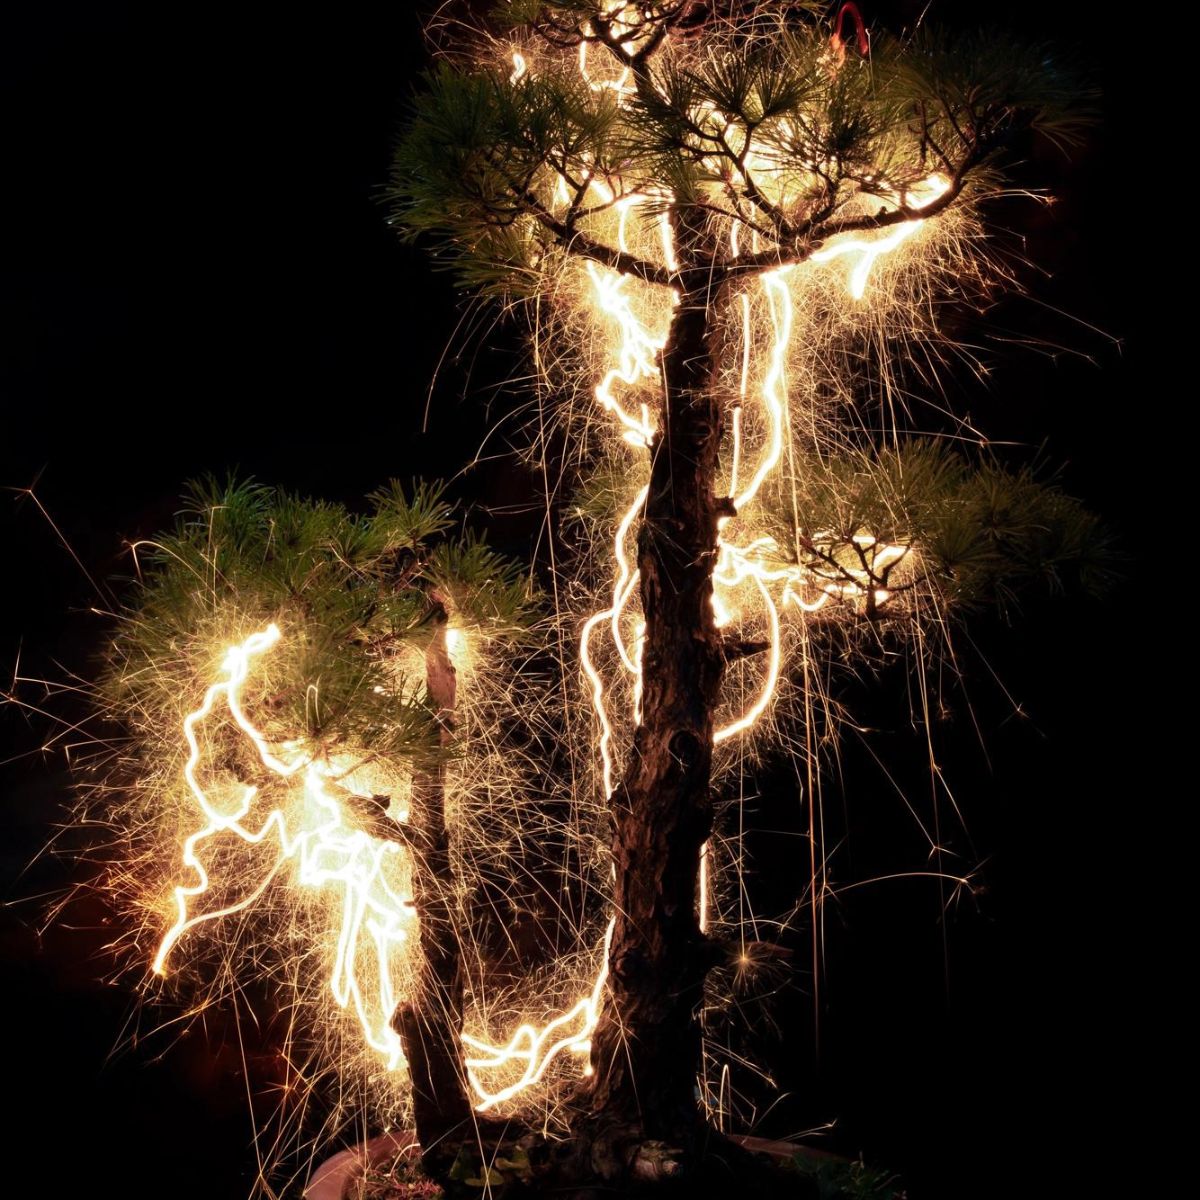 vitor-schiettis-pictures-show-trails-of-illuminated-bonsai-trees-featured